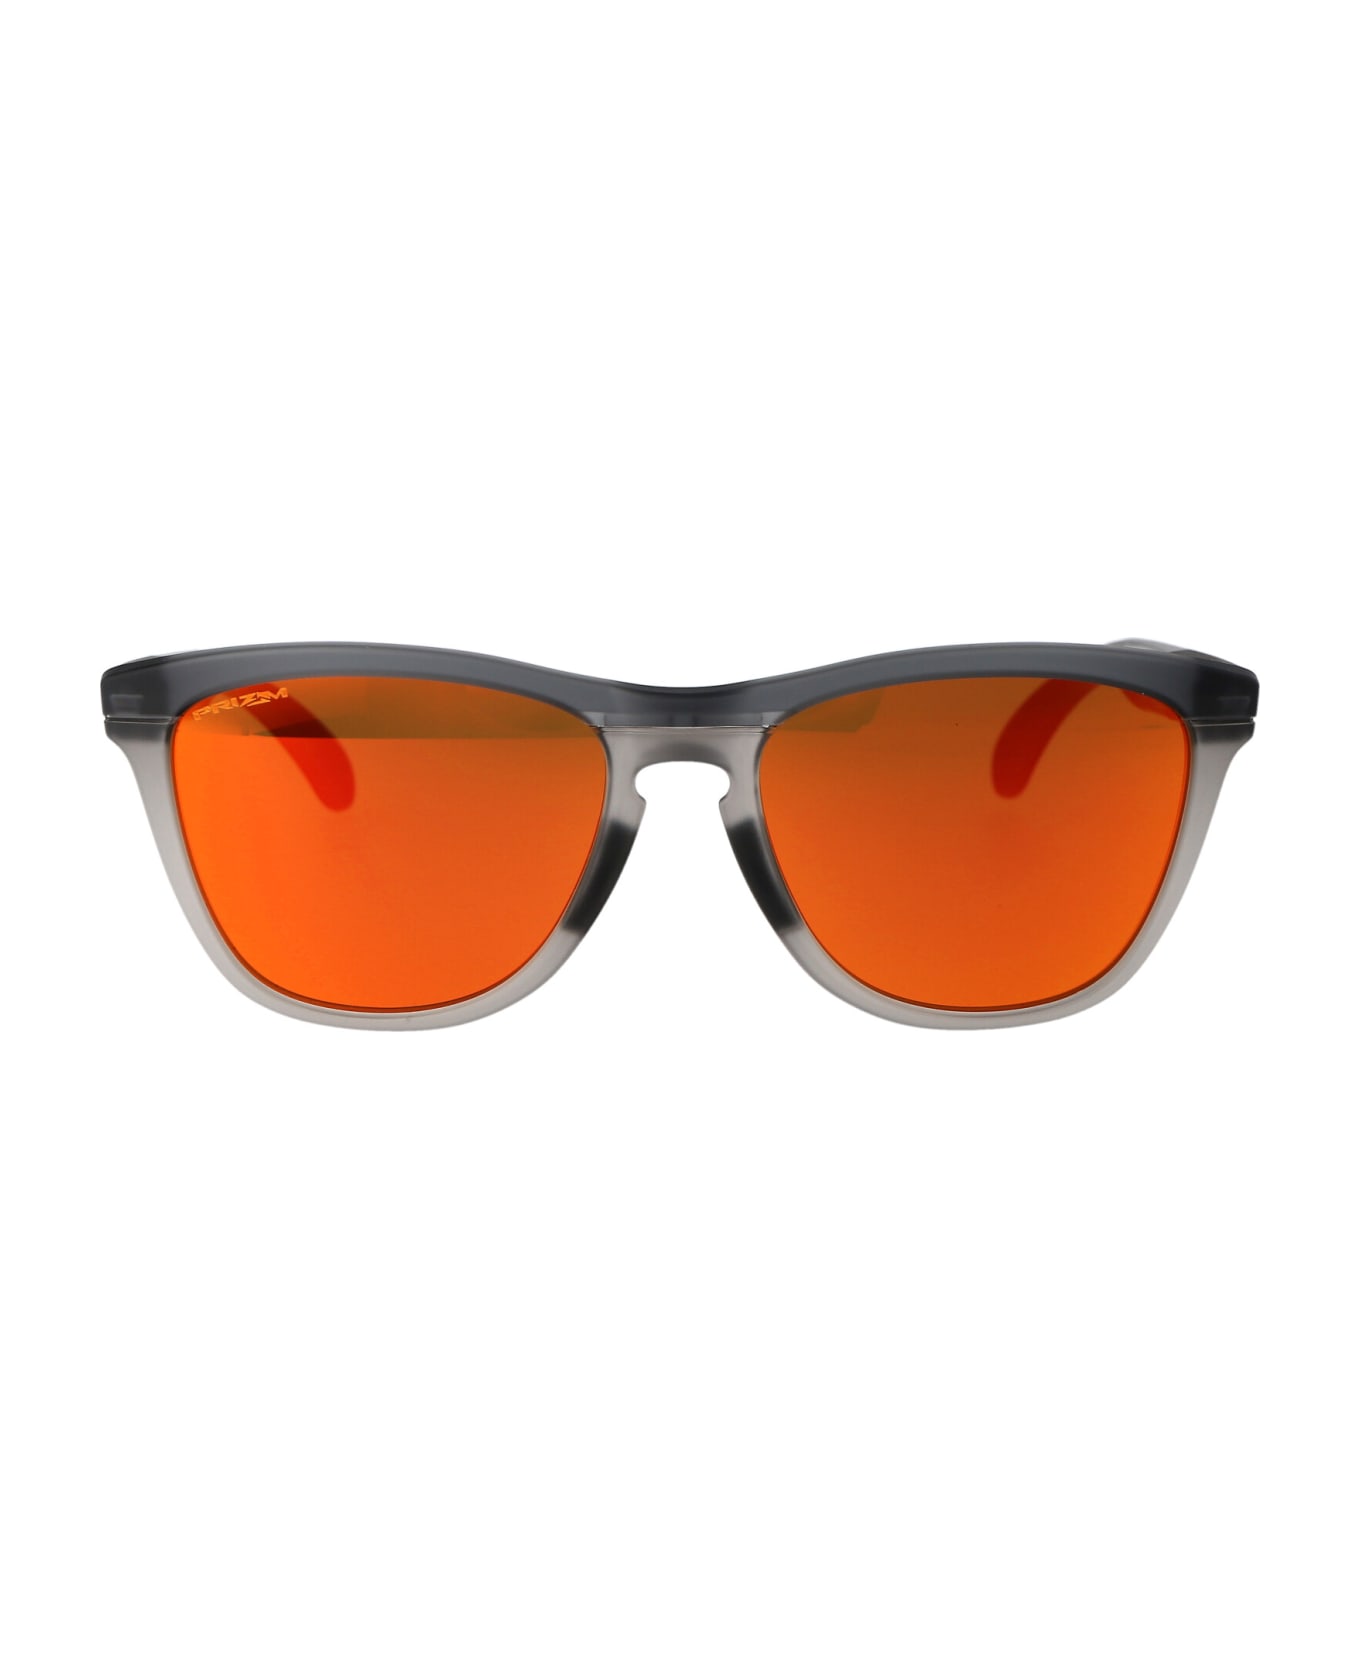 Oakley Frogskins Range Sunglasses - Red